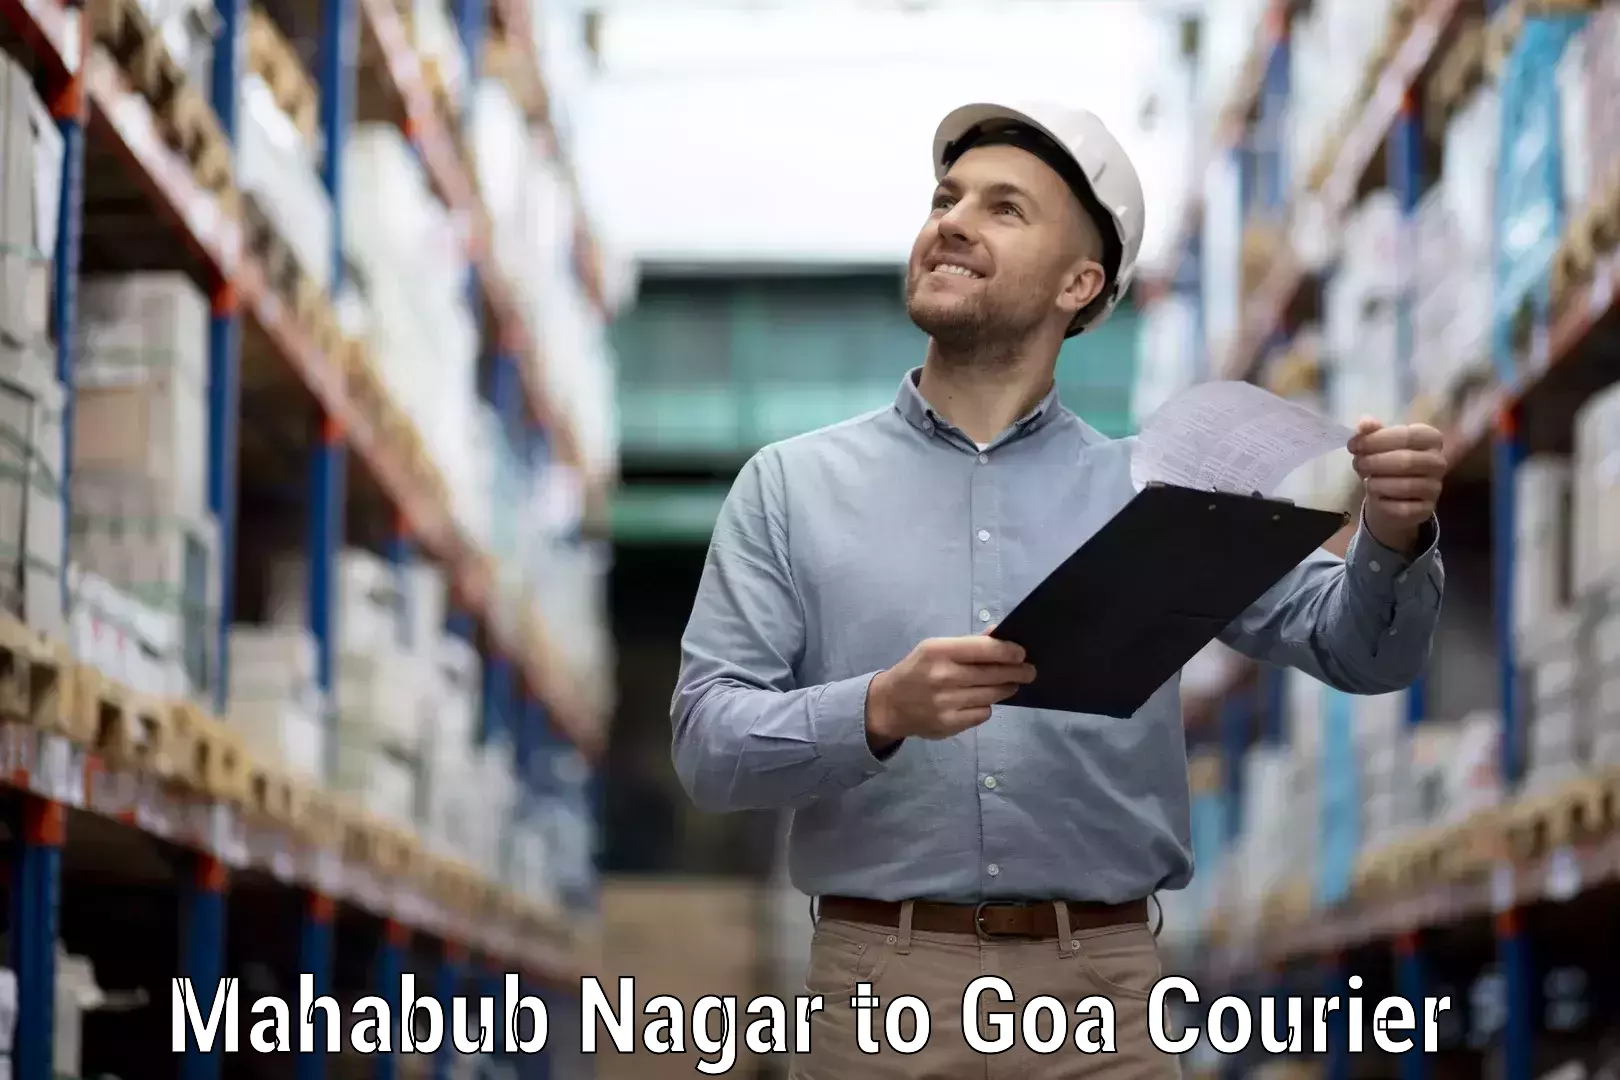 Courier service partnerships Mahabub Nagar to Goa